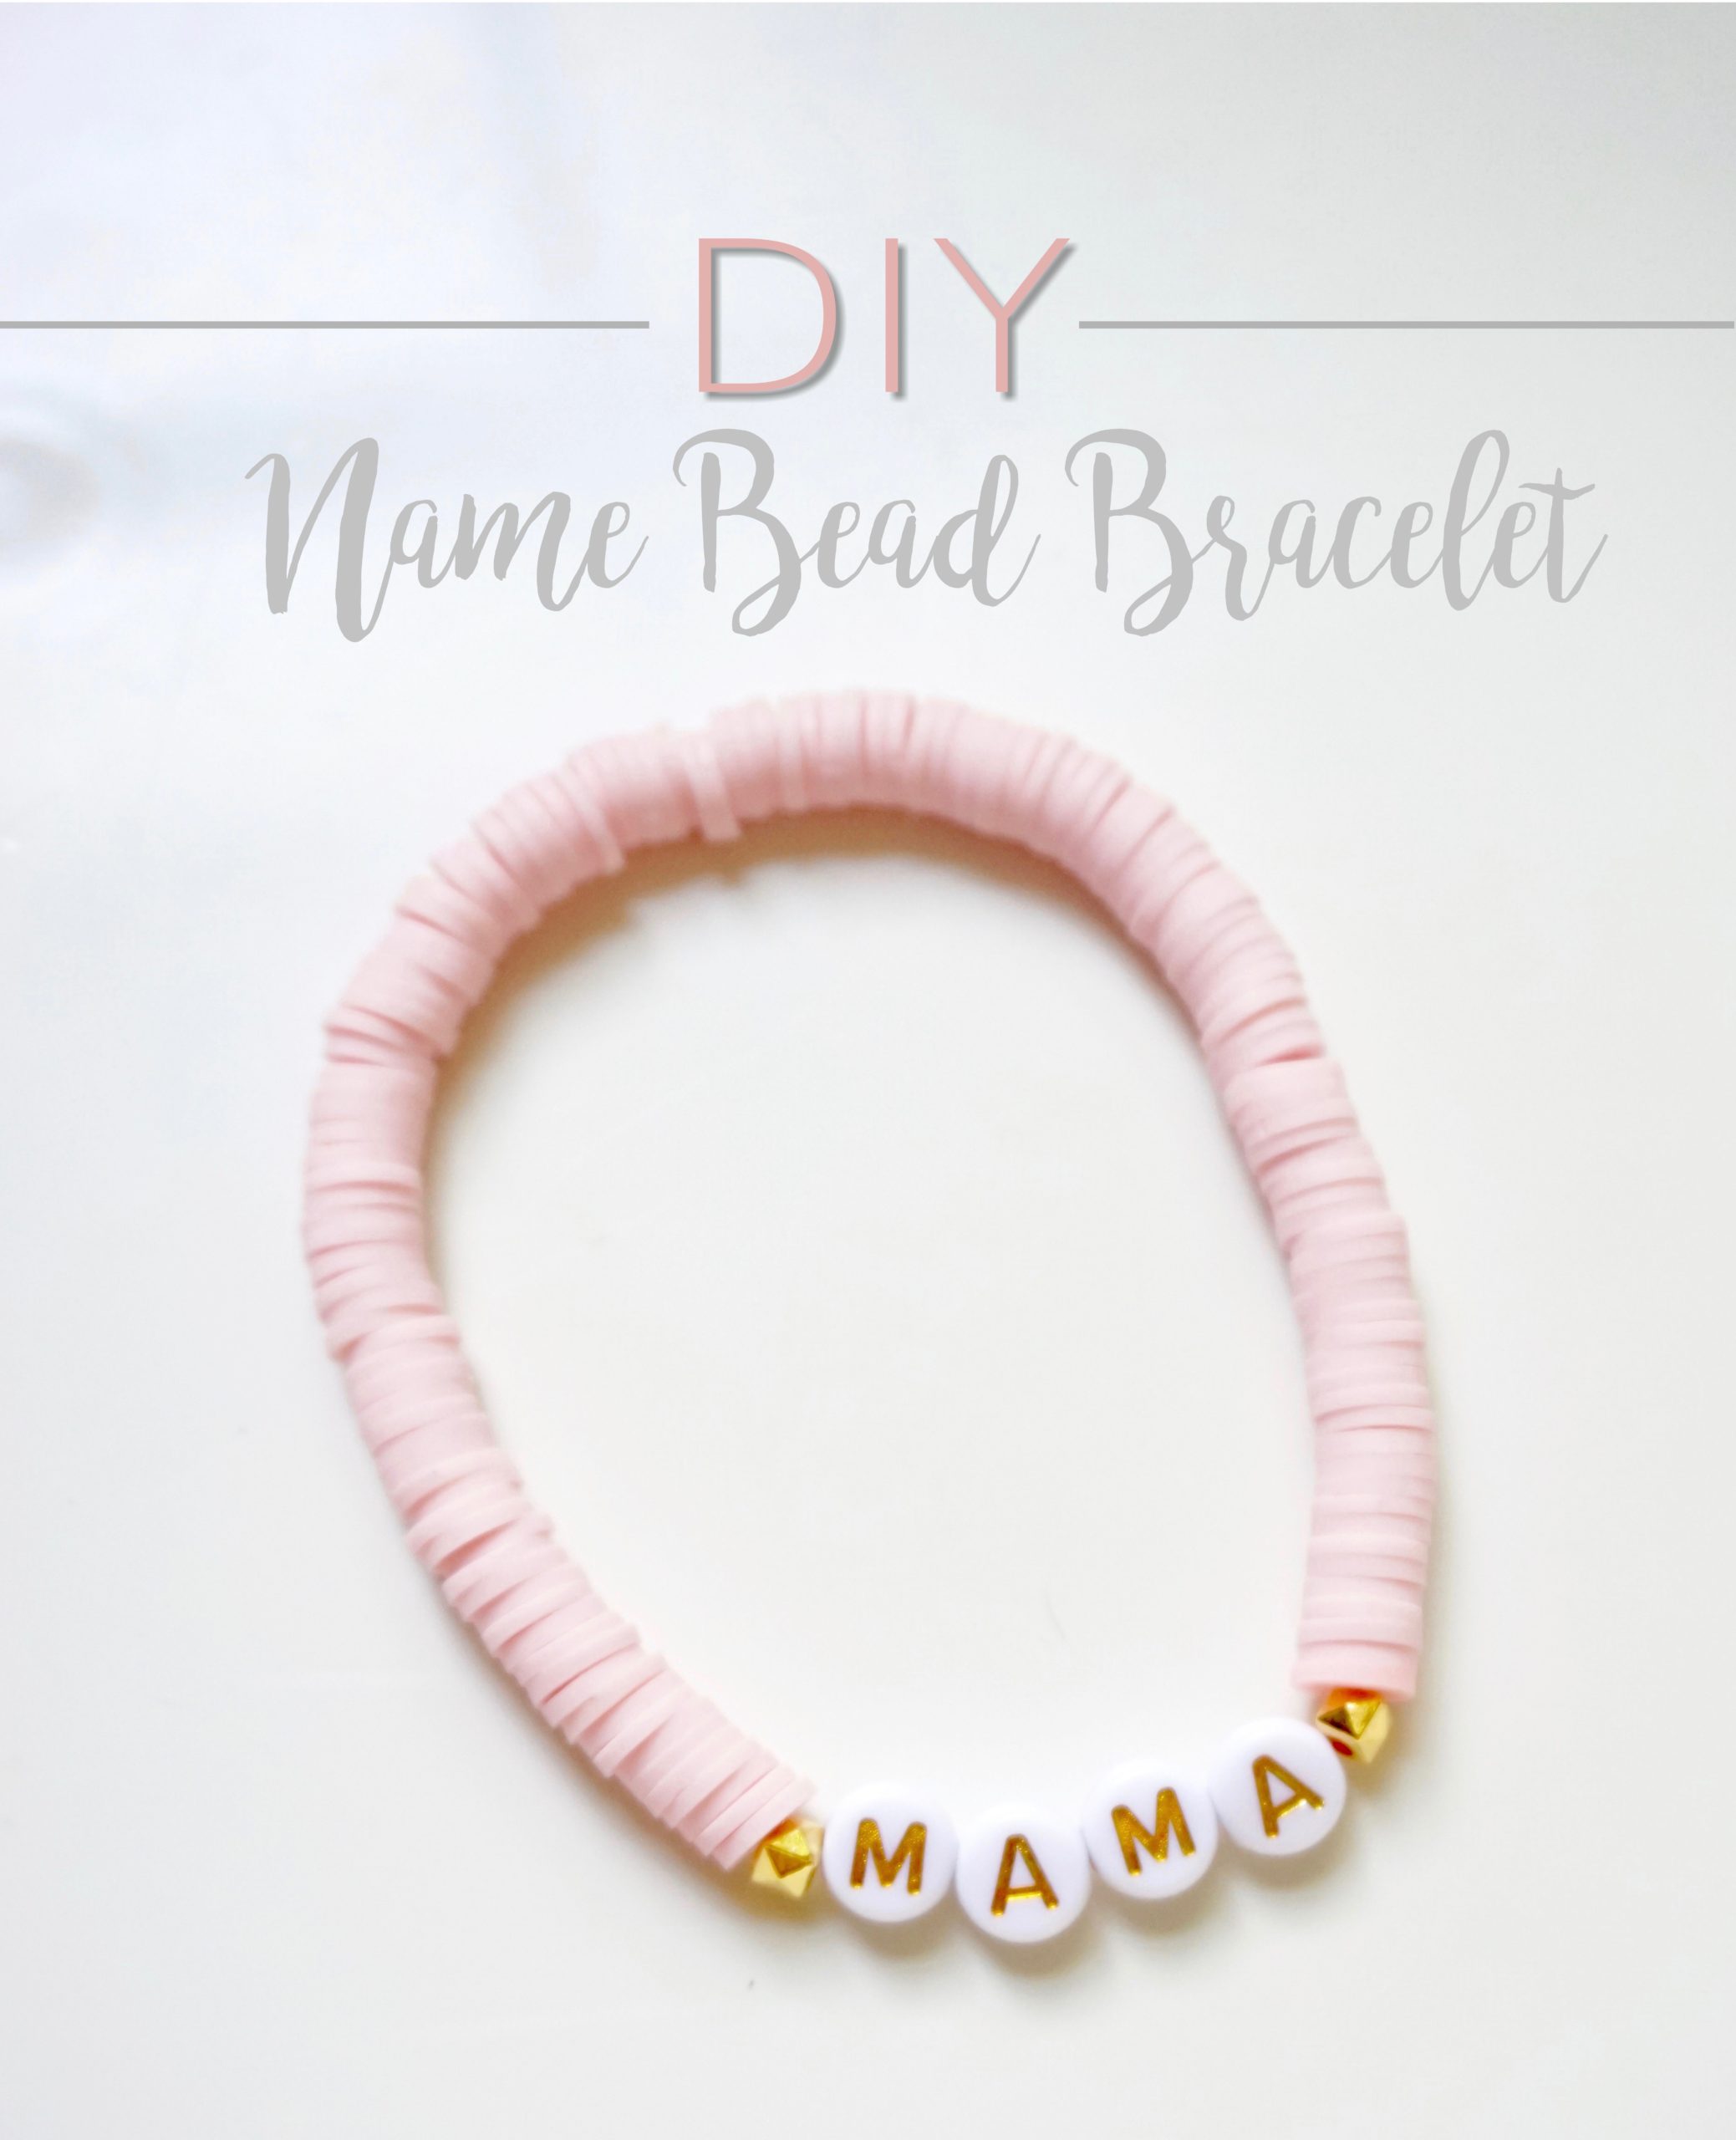 DIY Name Bead Bracelet